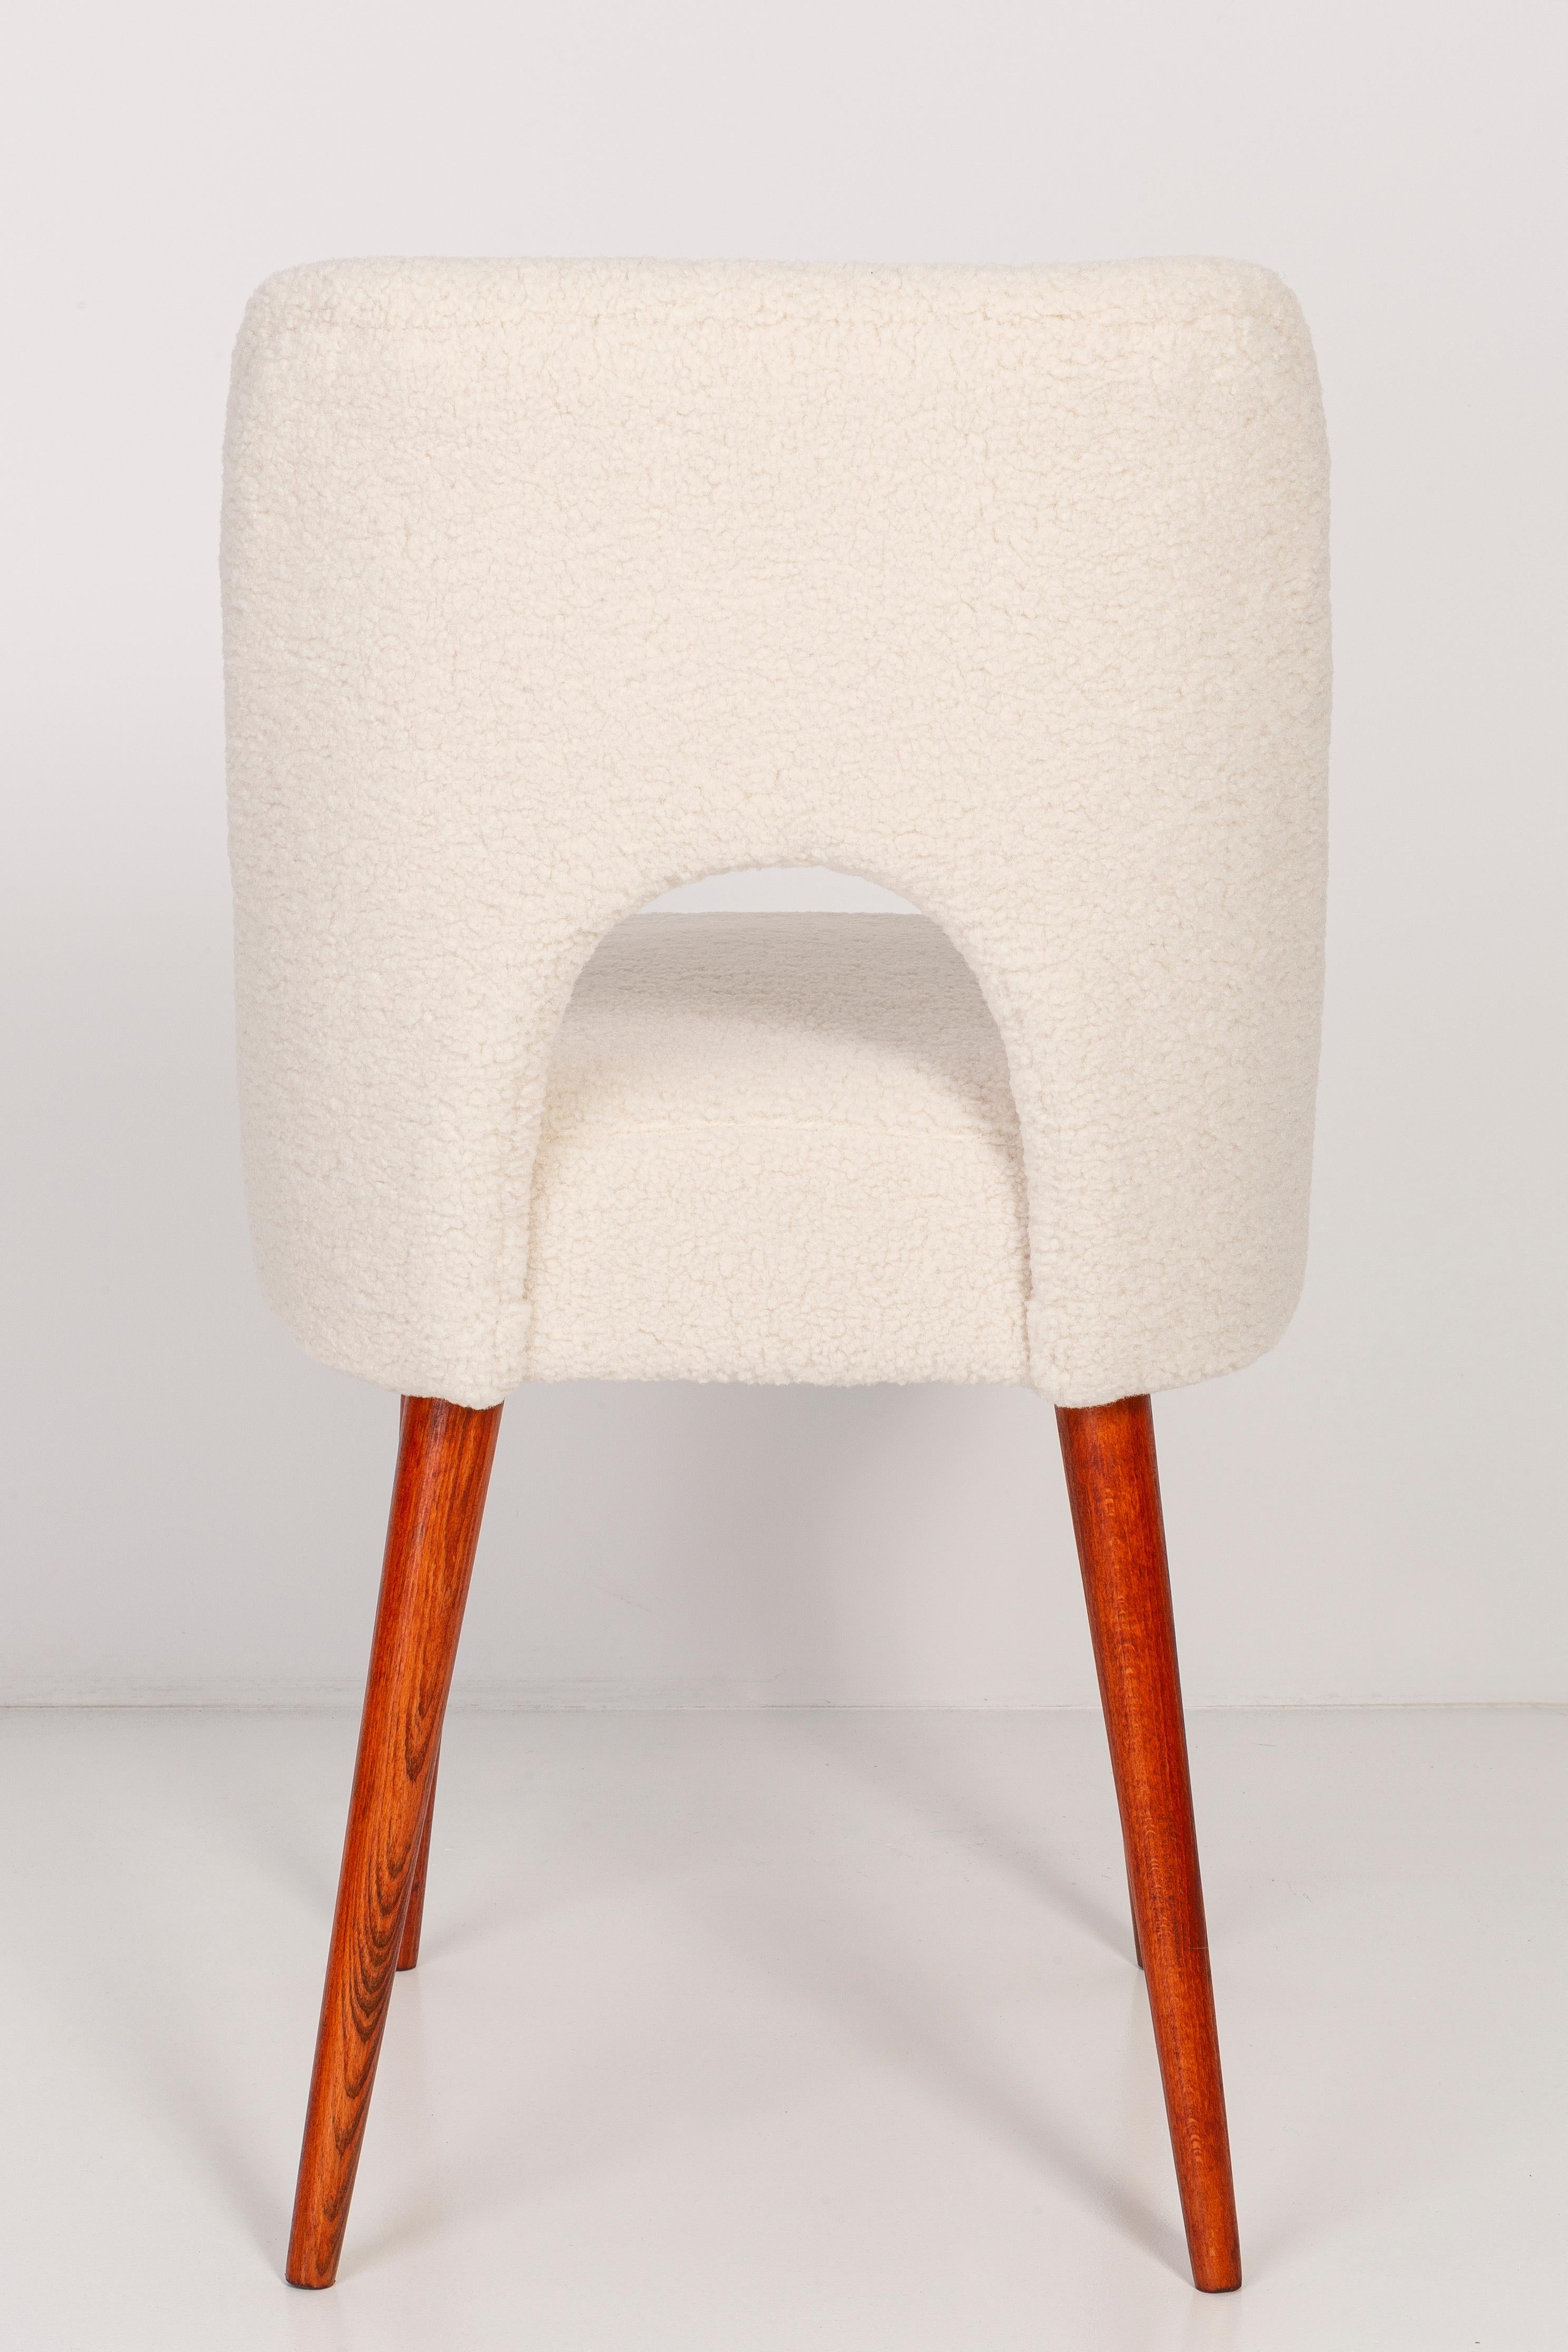 Polish Light Crème Boucle 'Shell' Chair, 1960s For Sale